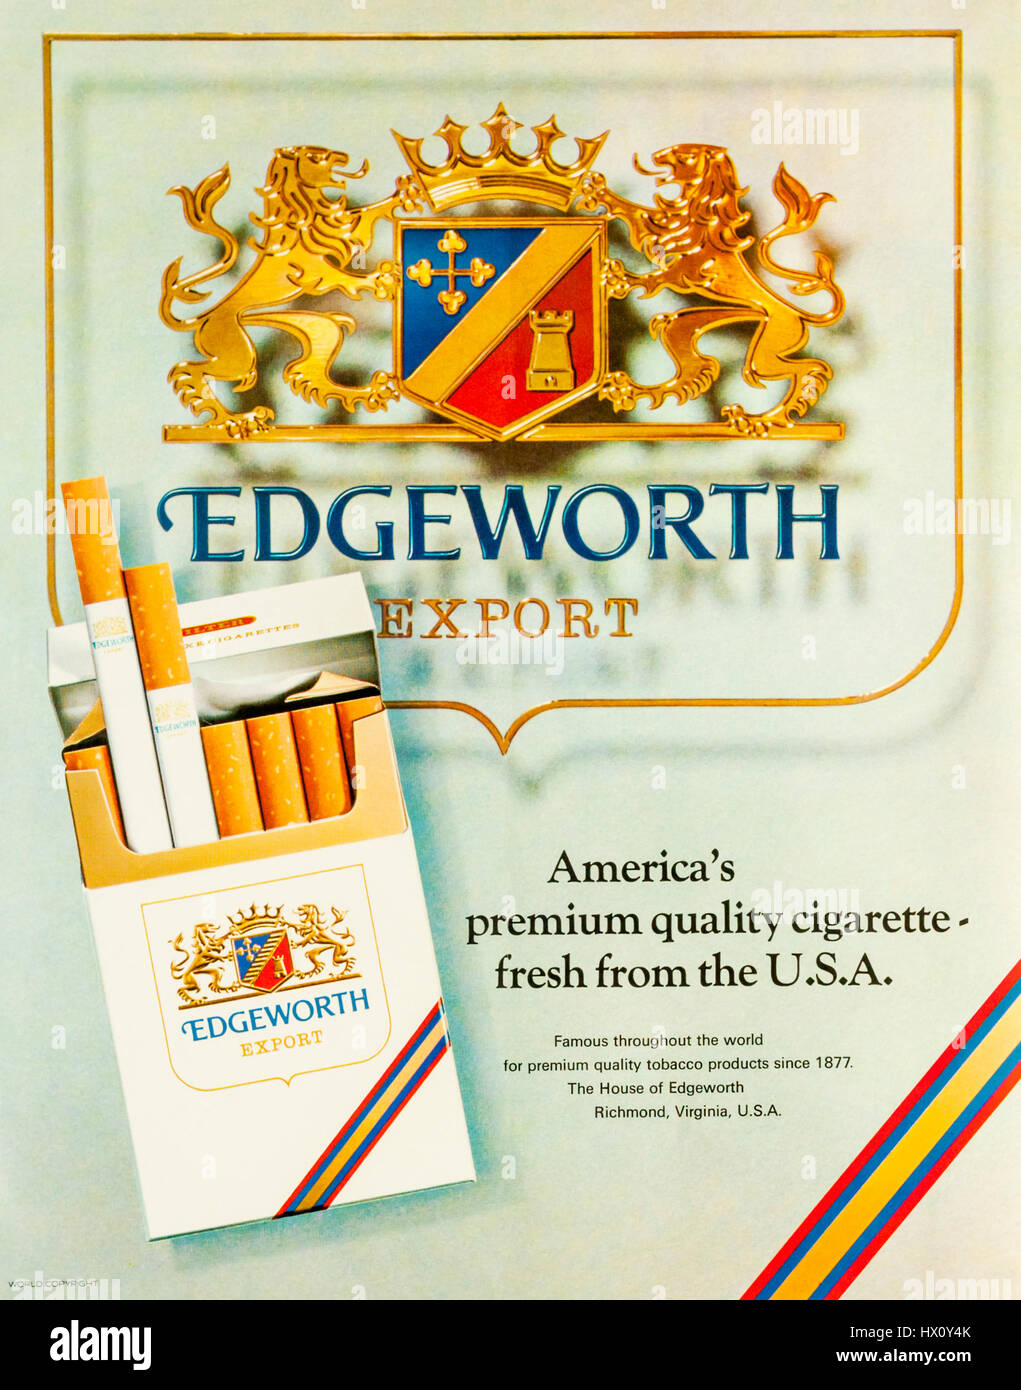 1970s magazine advertisement advertising Edgeworth cigarettes. Stock Photo